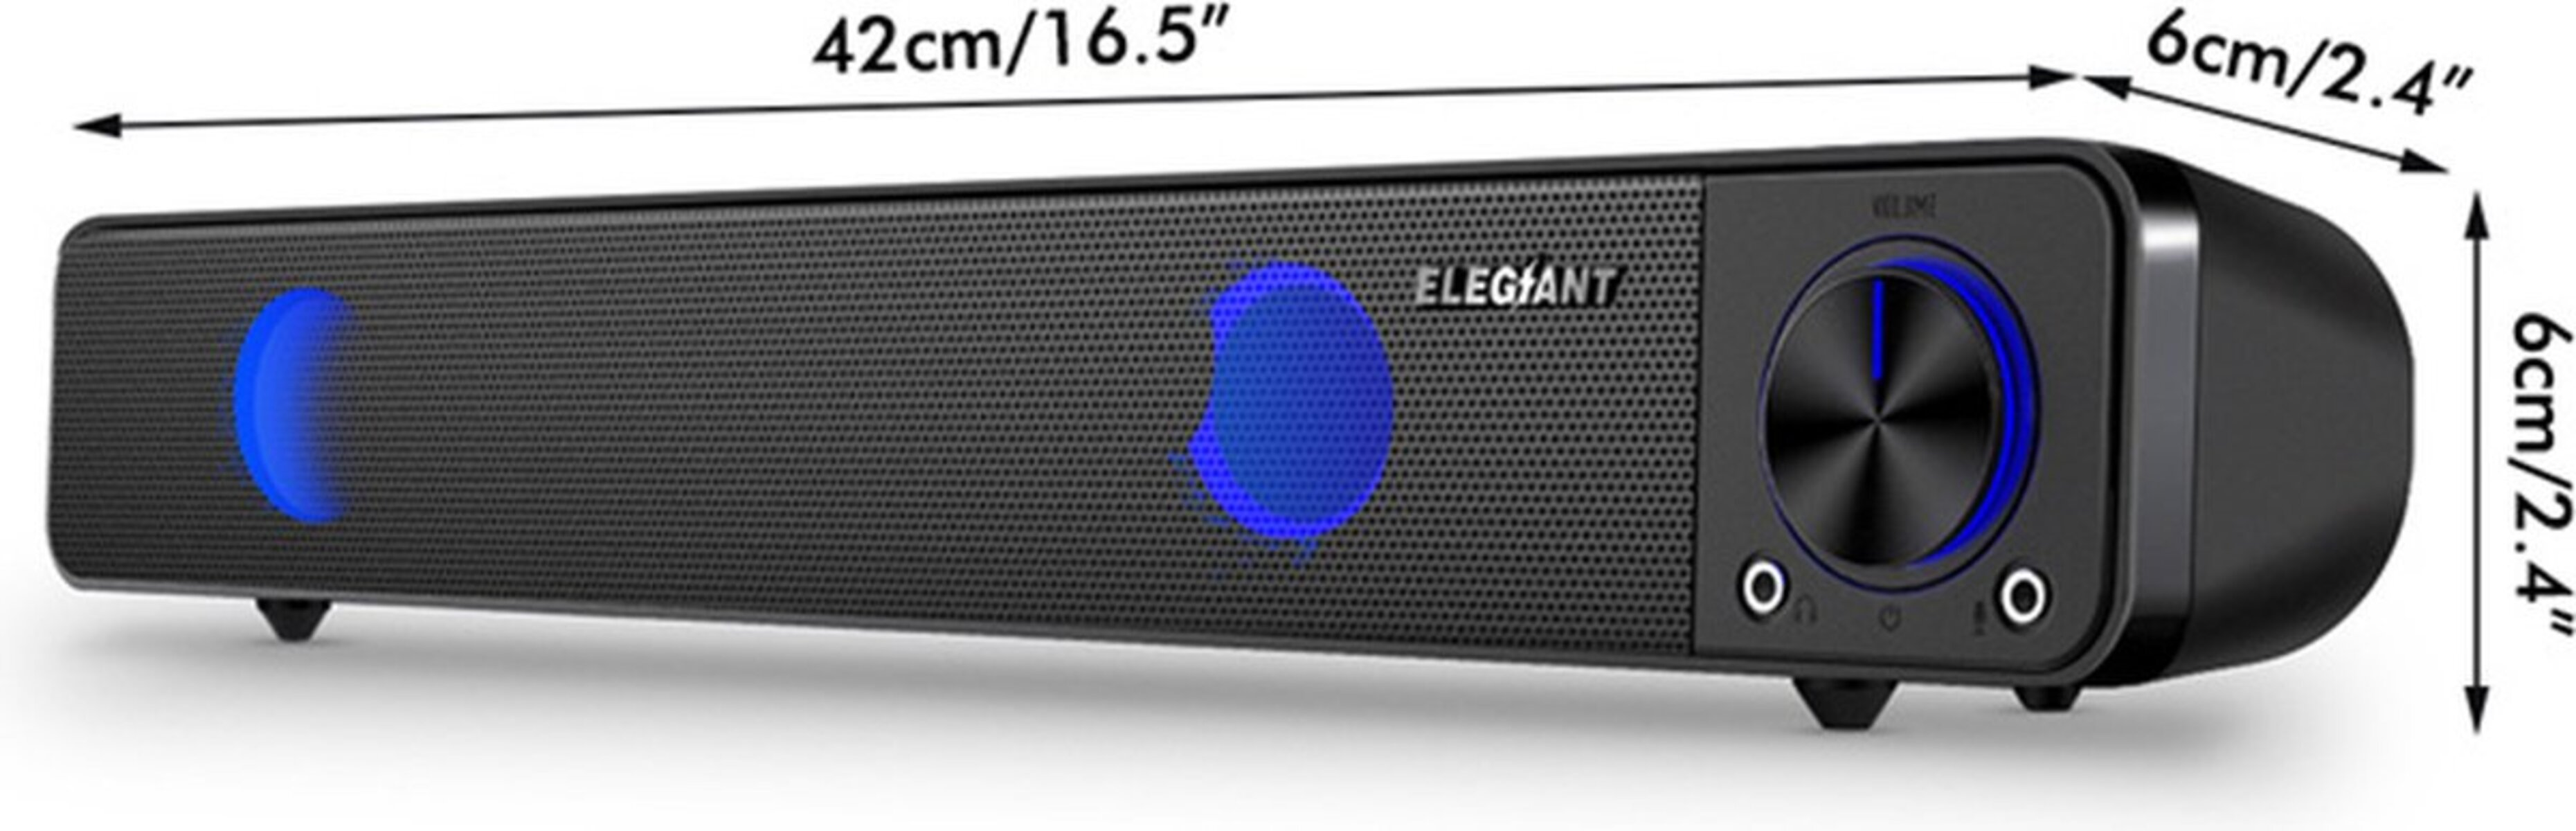 Soundbar Gaming für Lautsprecher PC ELEGIANT